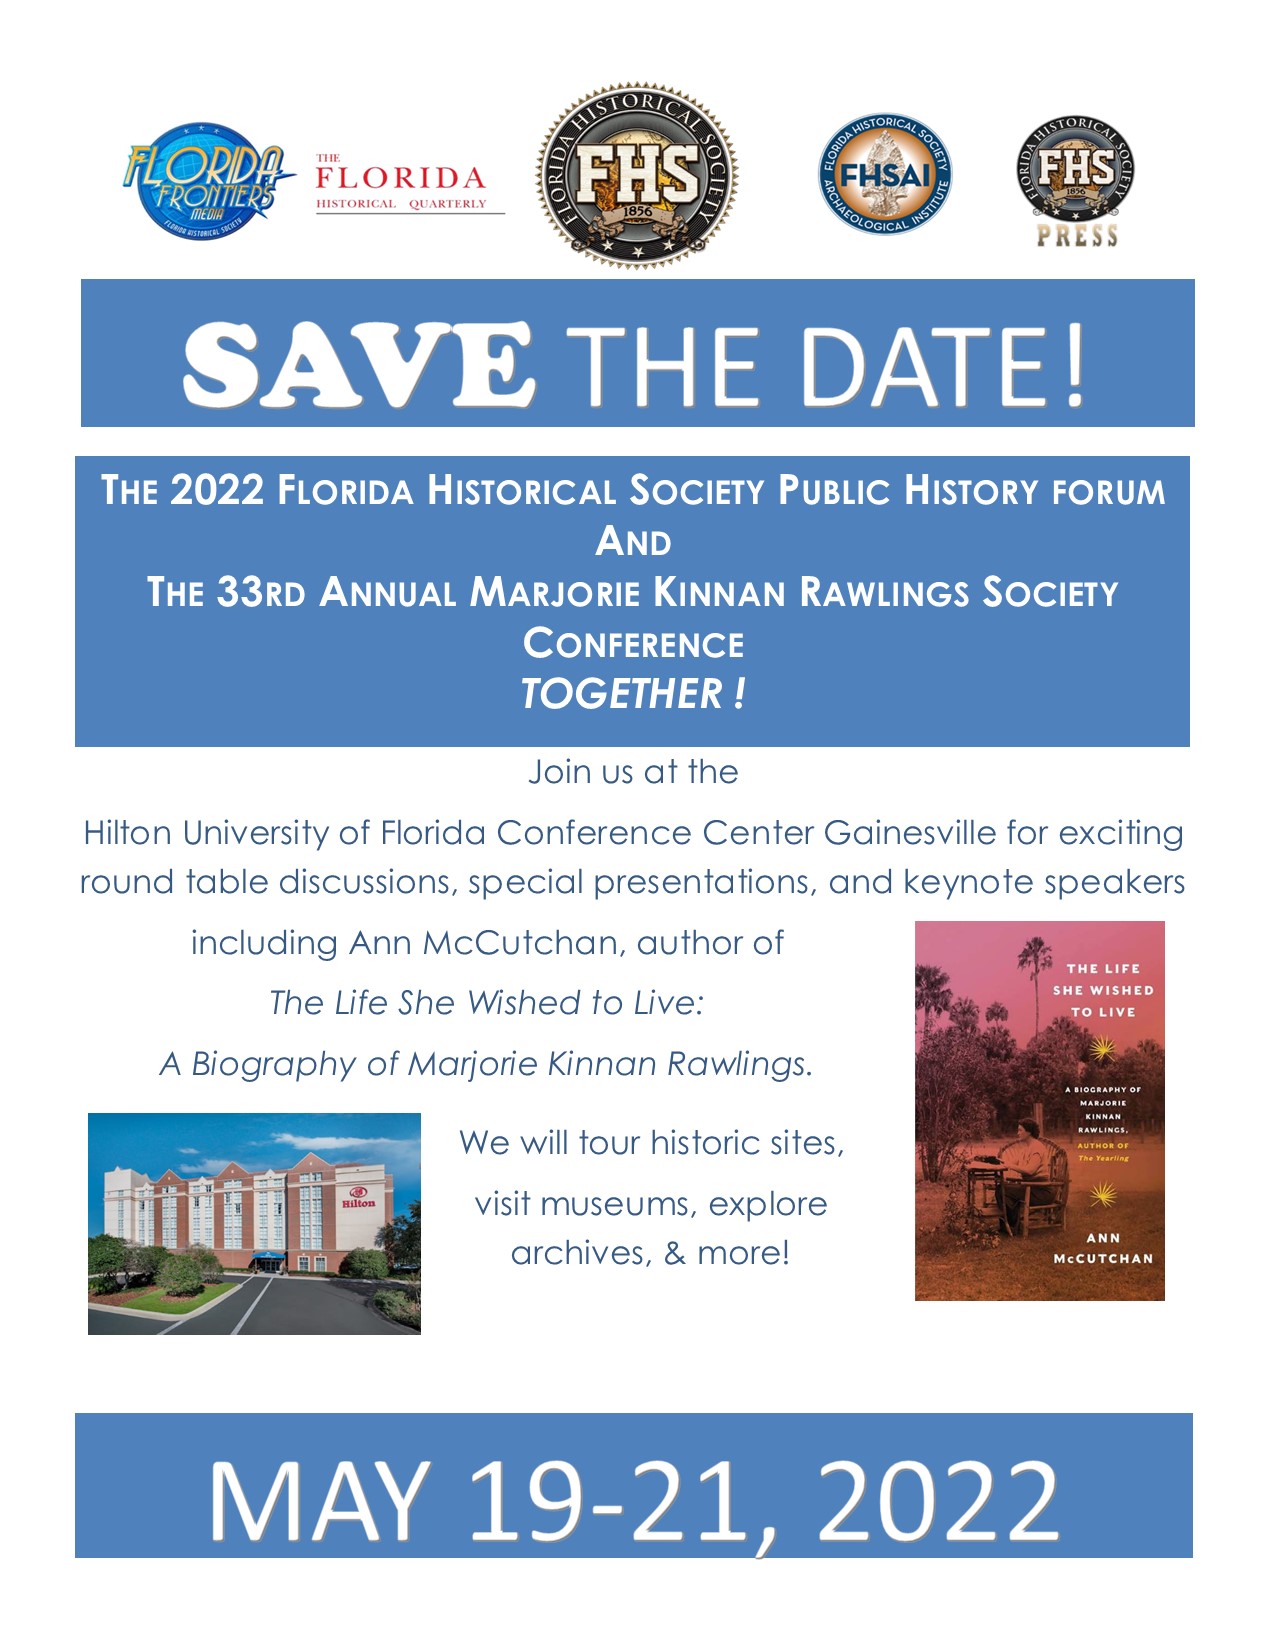 2022 Florida Historical Society Public Forum & Marjorie Kinnan Rawlings Society Conference